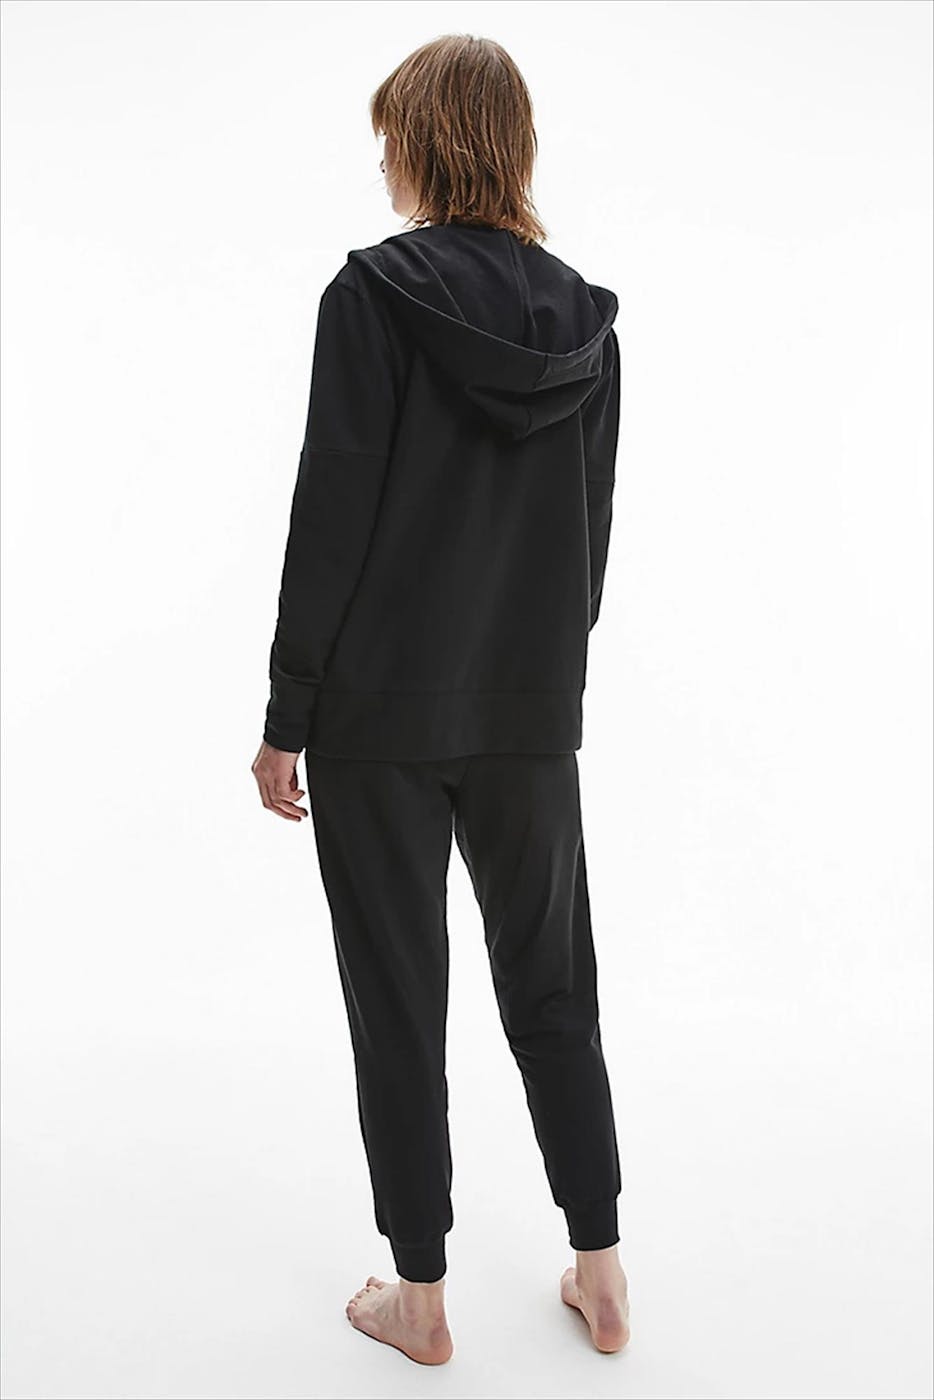 Calvin Klein Underwear - Zwarte hoodie met rits